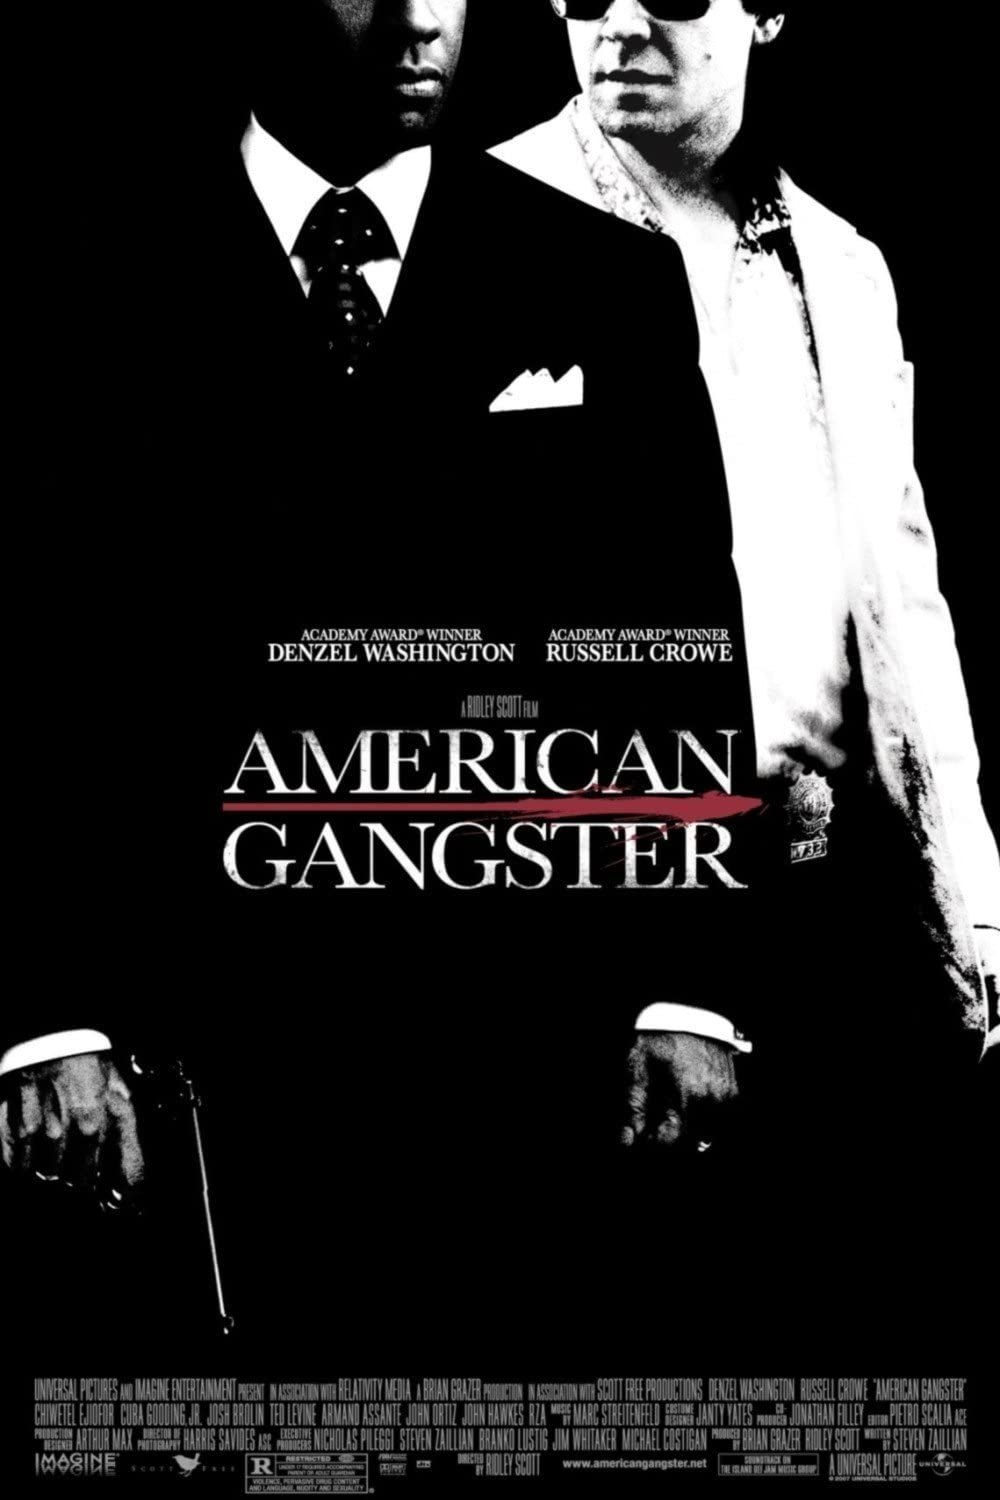 Best Josh Brolin Movies: American Gangster